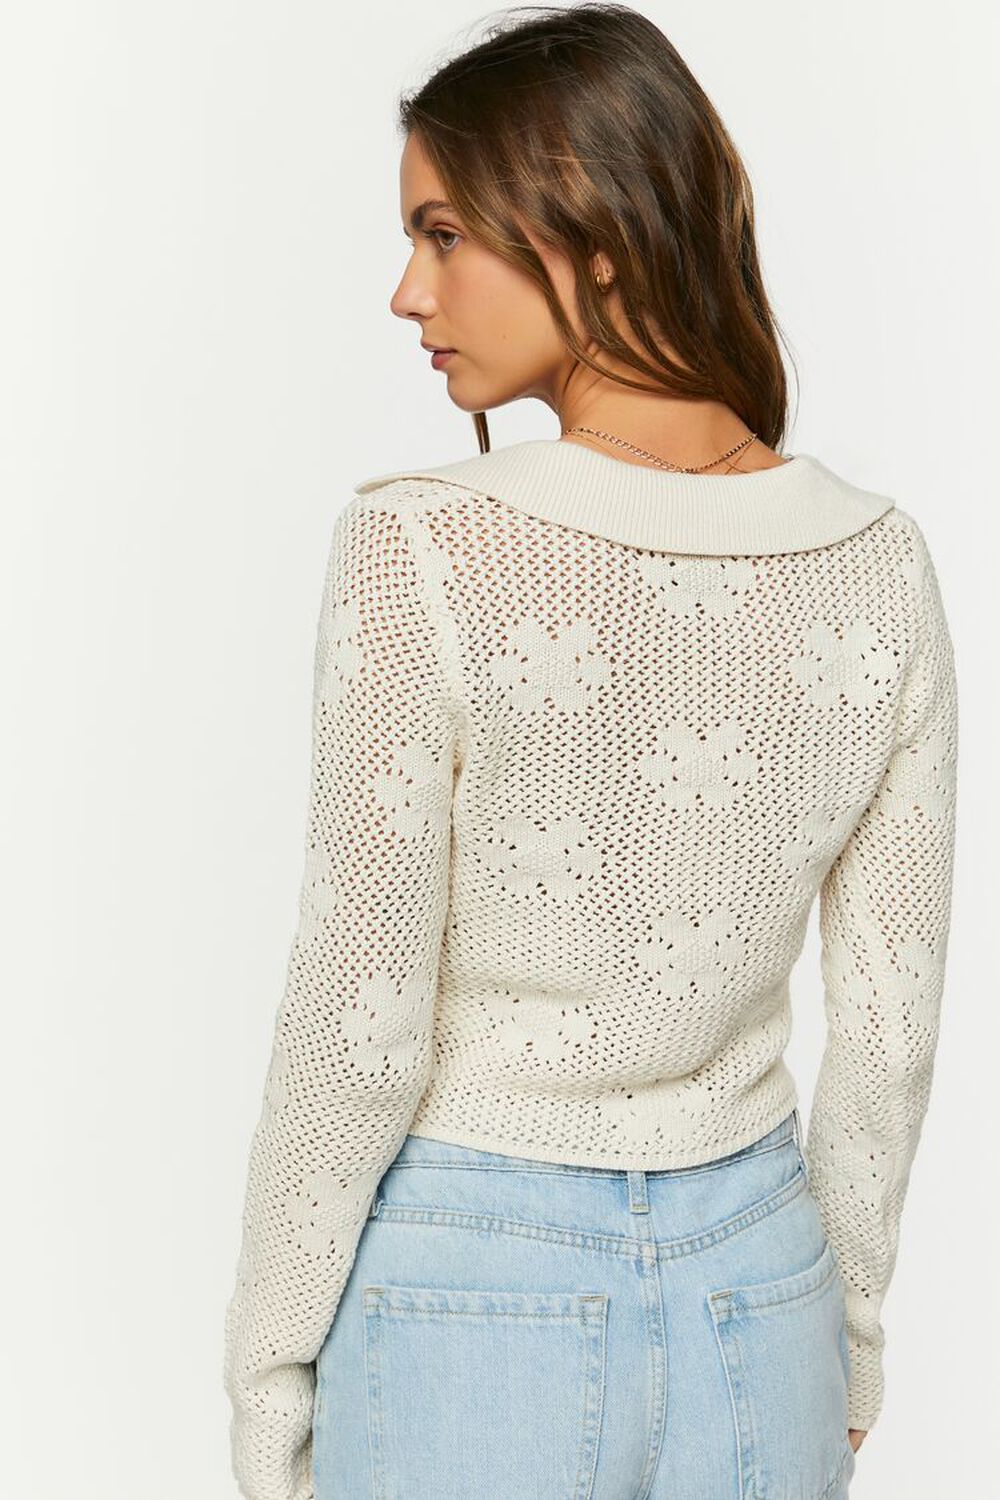 VANILLA Floral Crochet Cardigan Sweater, image 3